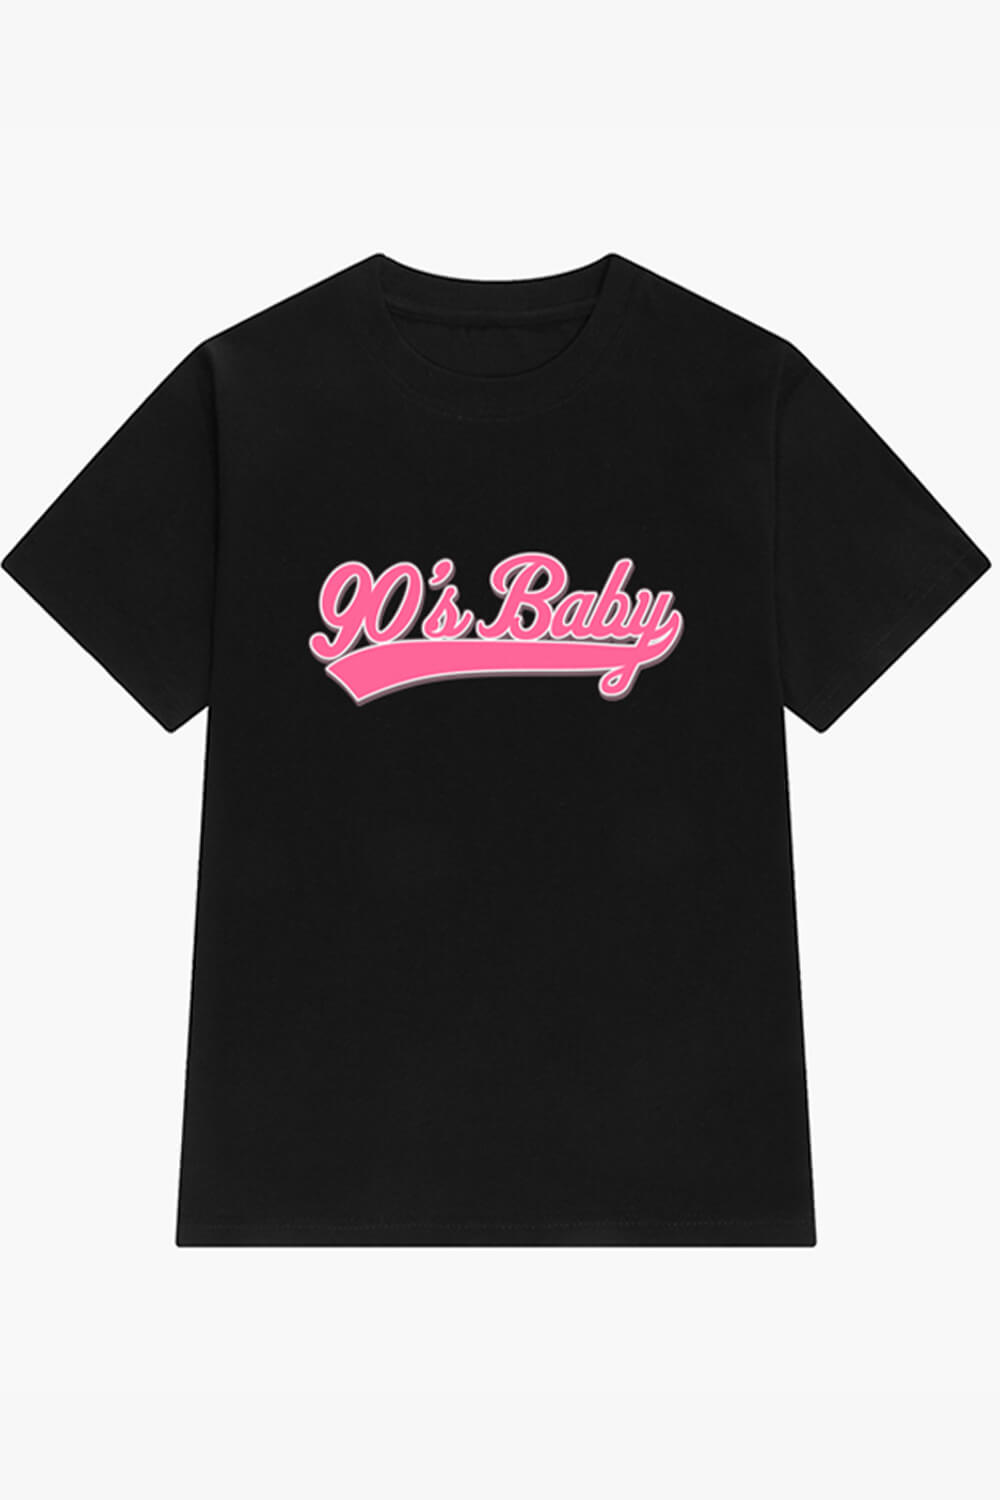 90s Baby Aesthetic T-Shirt